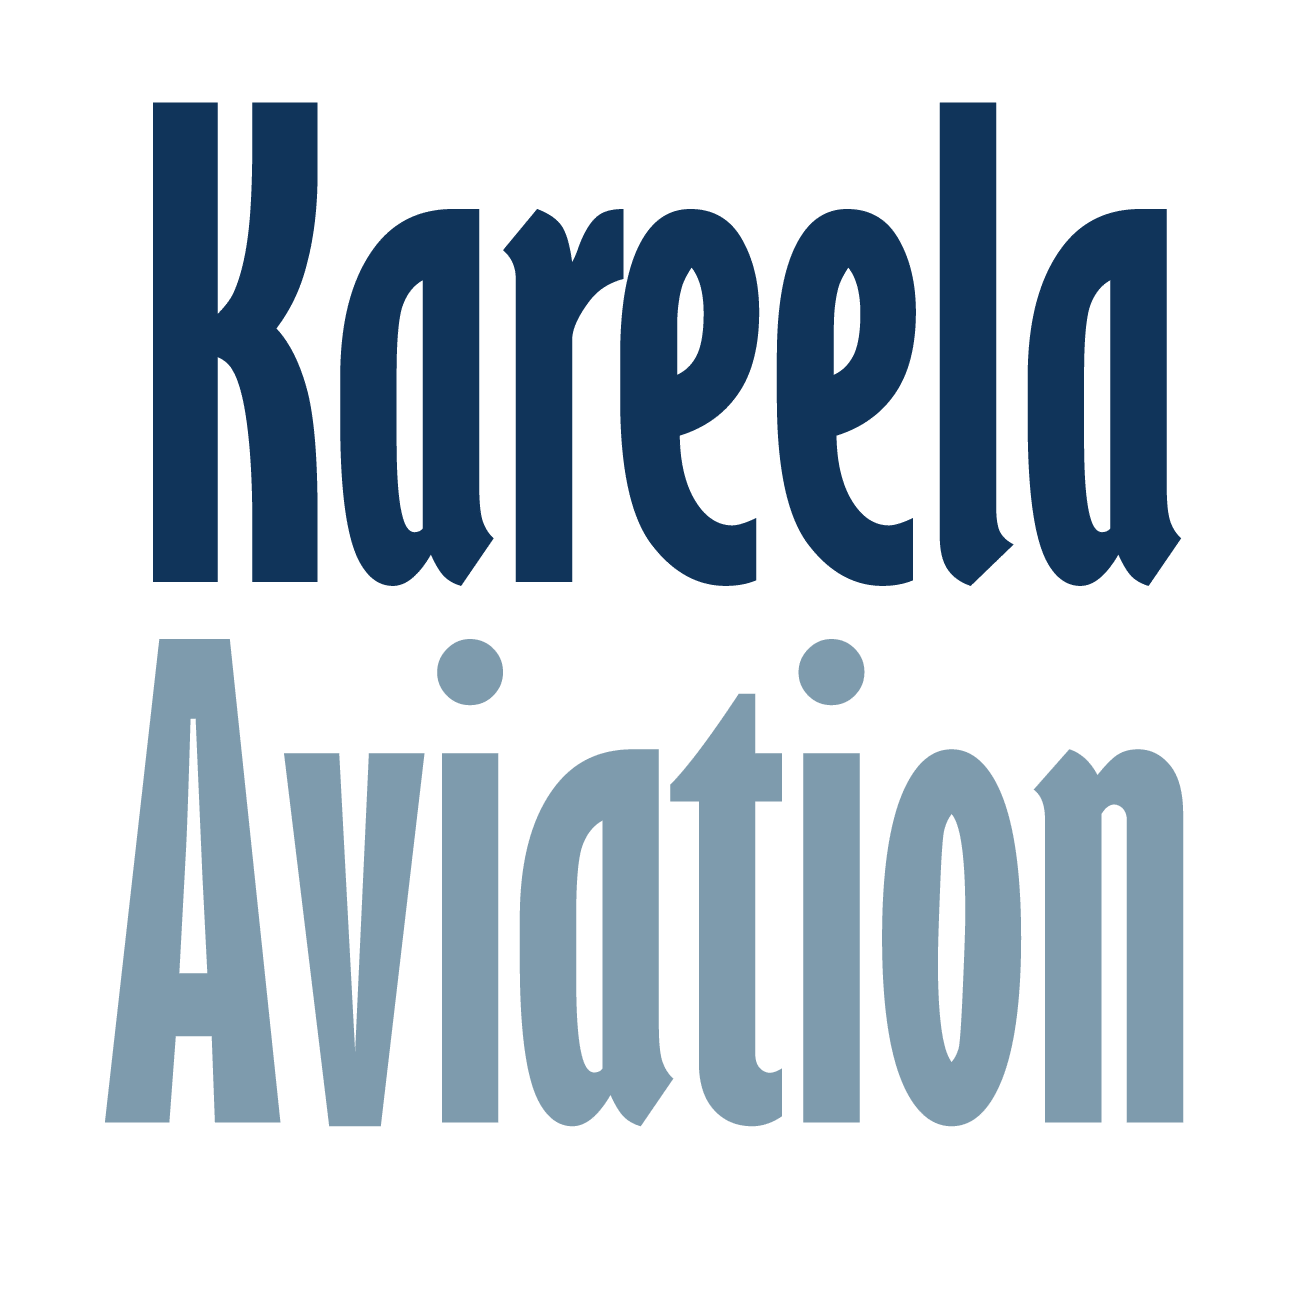 Kareela Aviation Square Logo on Transparent 